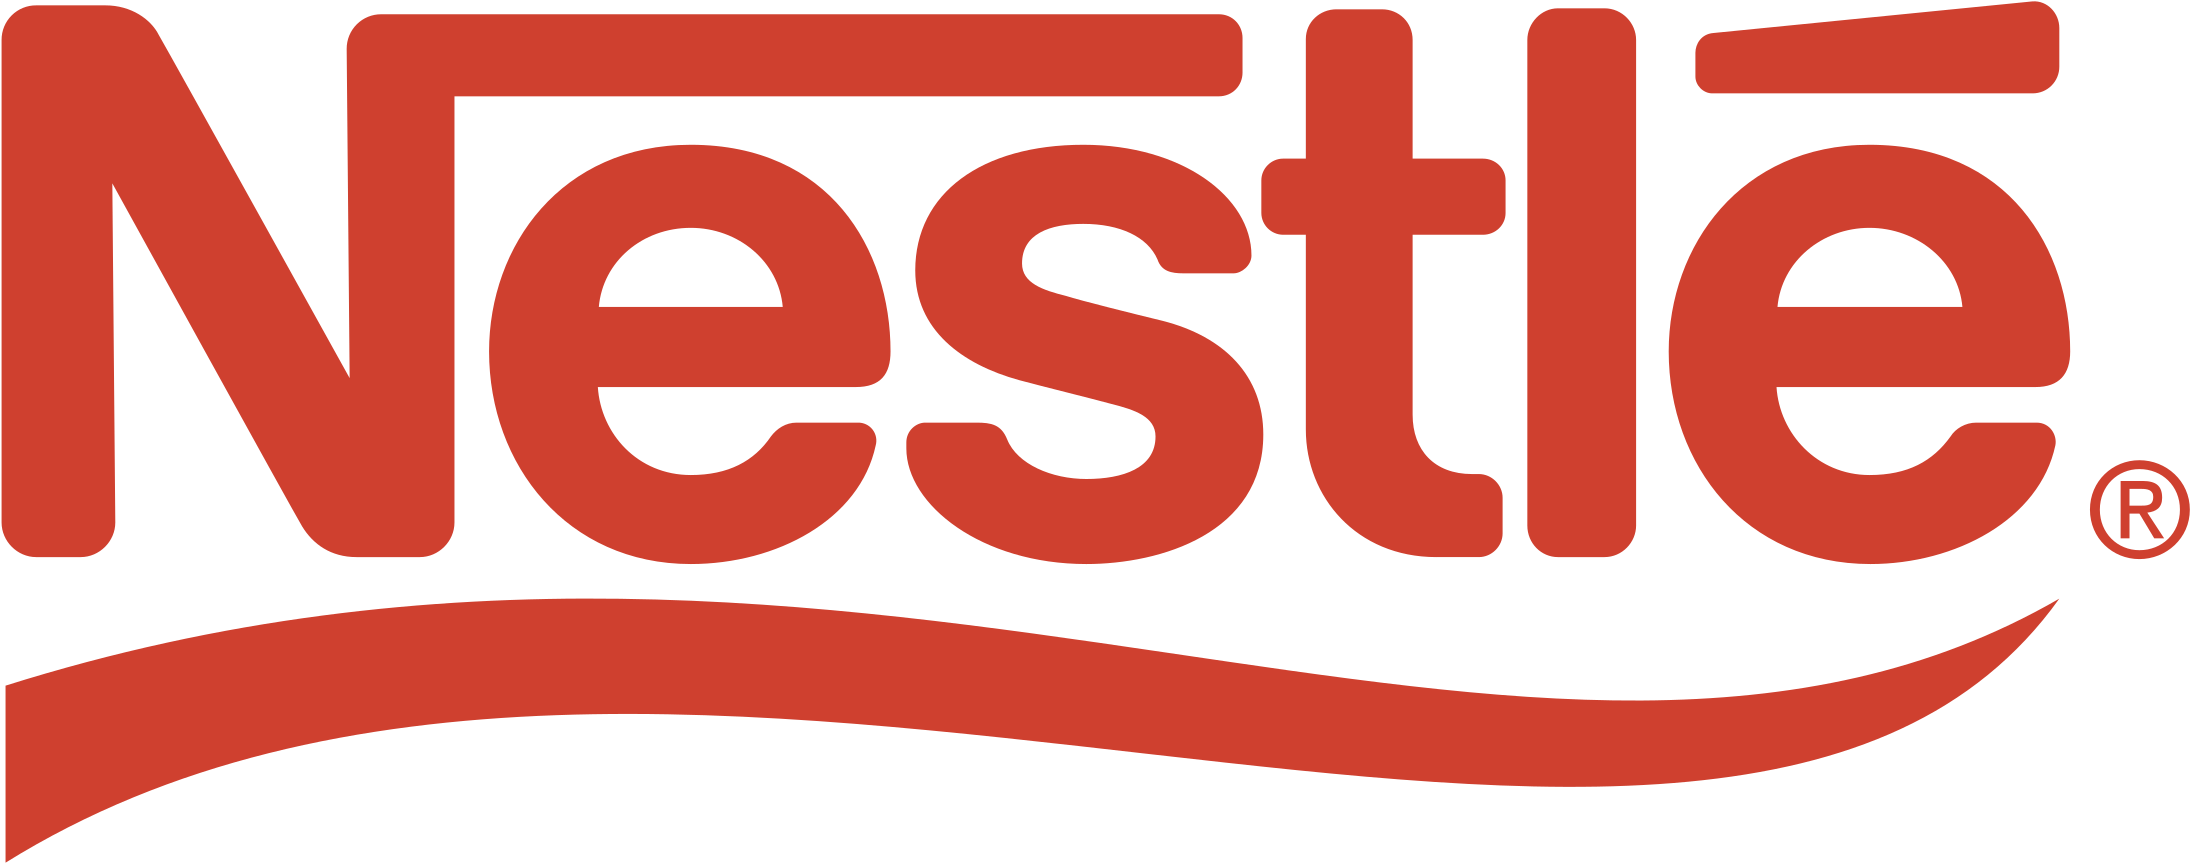 Nestle Logo PNG - 178569